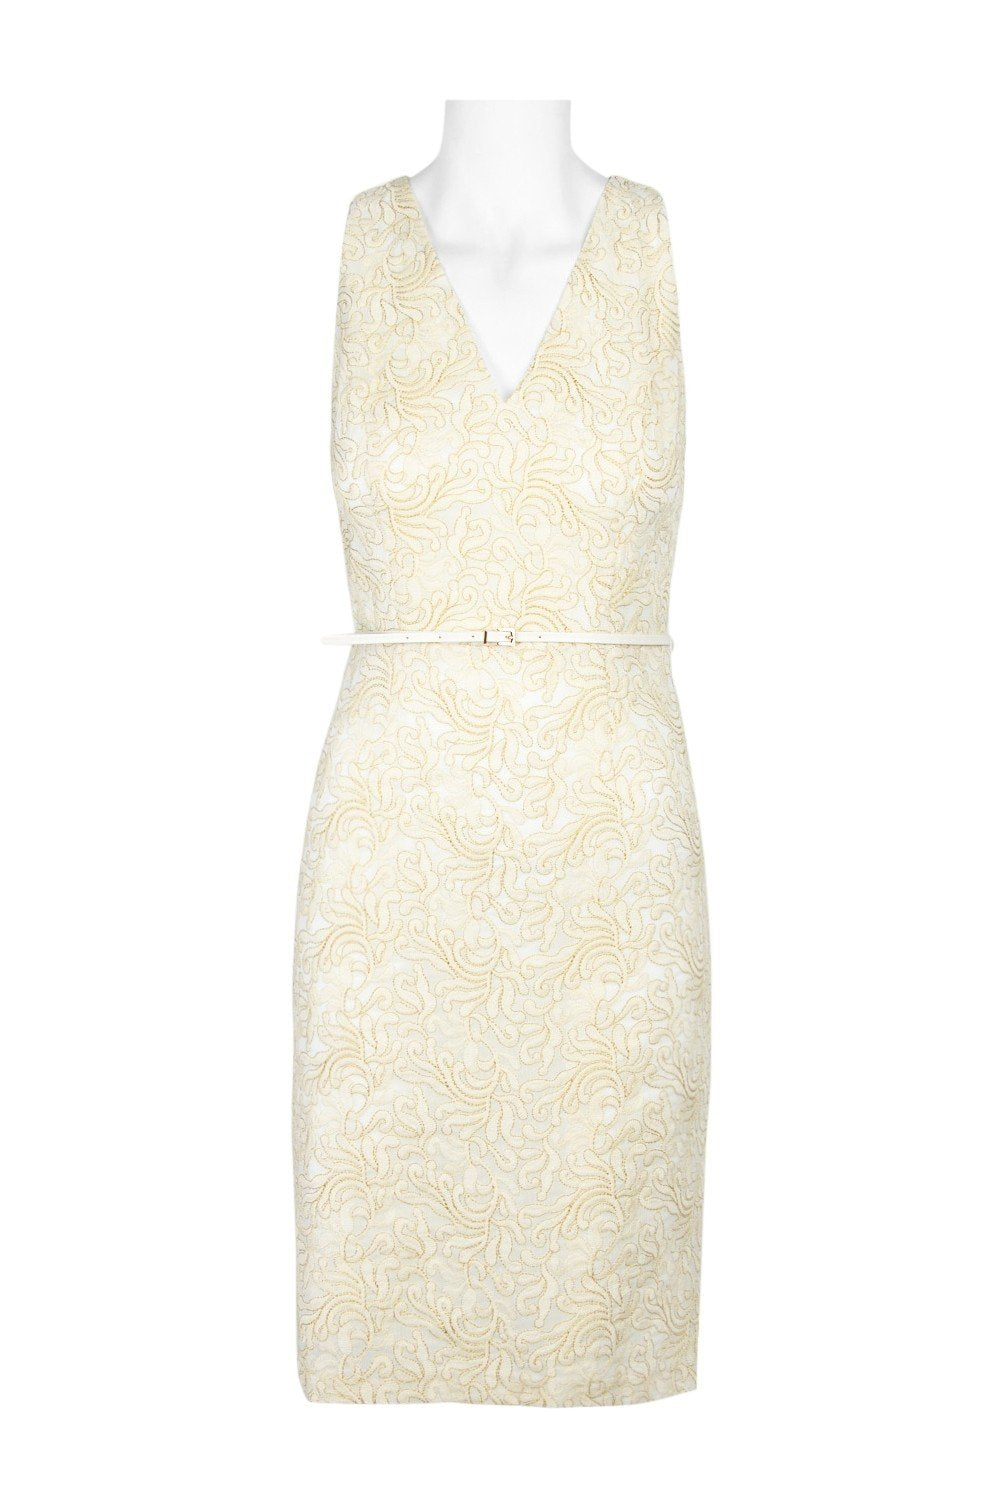 Adrianna Papell - AP1D100569 Sleeveless V-Neck Embroidered Dress In White